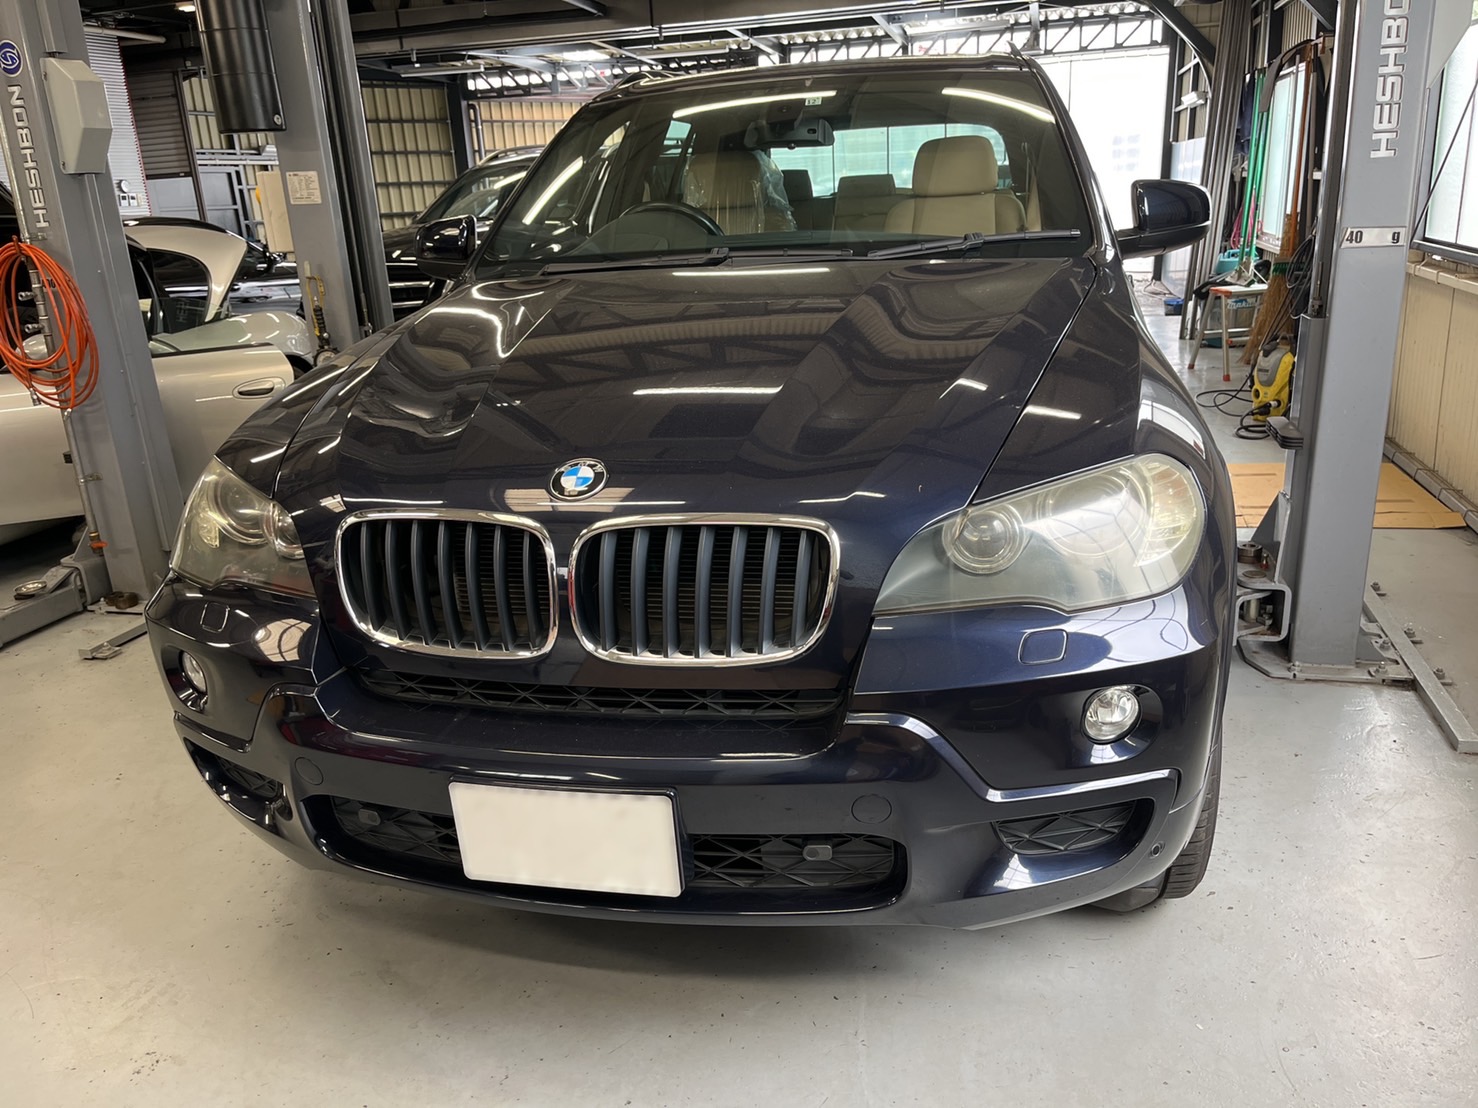 BMW E70 X5 ABA-FE30 エンジンオイル漏れ修理 作業事例 | 輸入車修理専門店 S-TECH carservice  (エステックカーサービス) ベンツ・BMW・ジャガー・ポルシェなどの外車修理・鈑金塗装